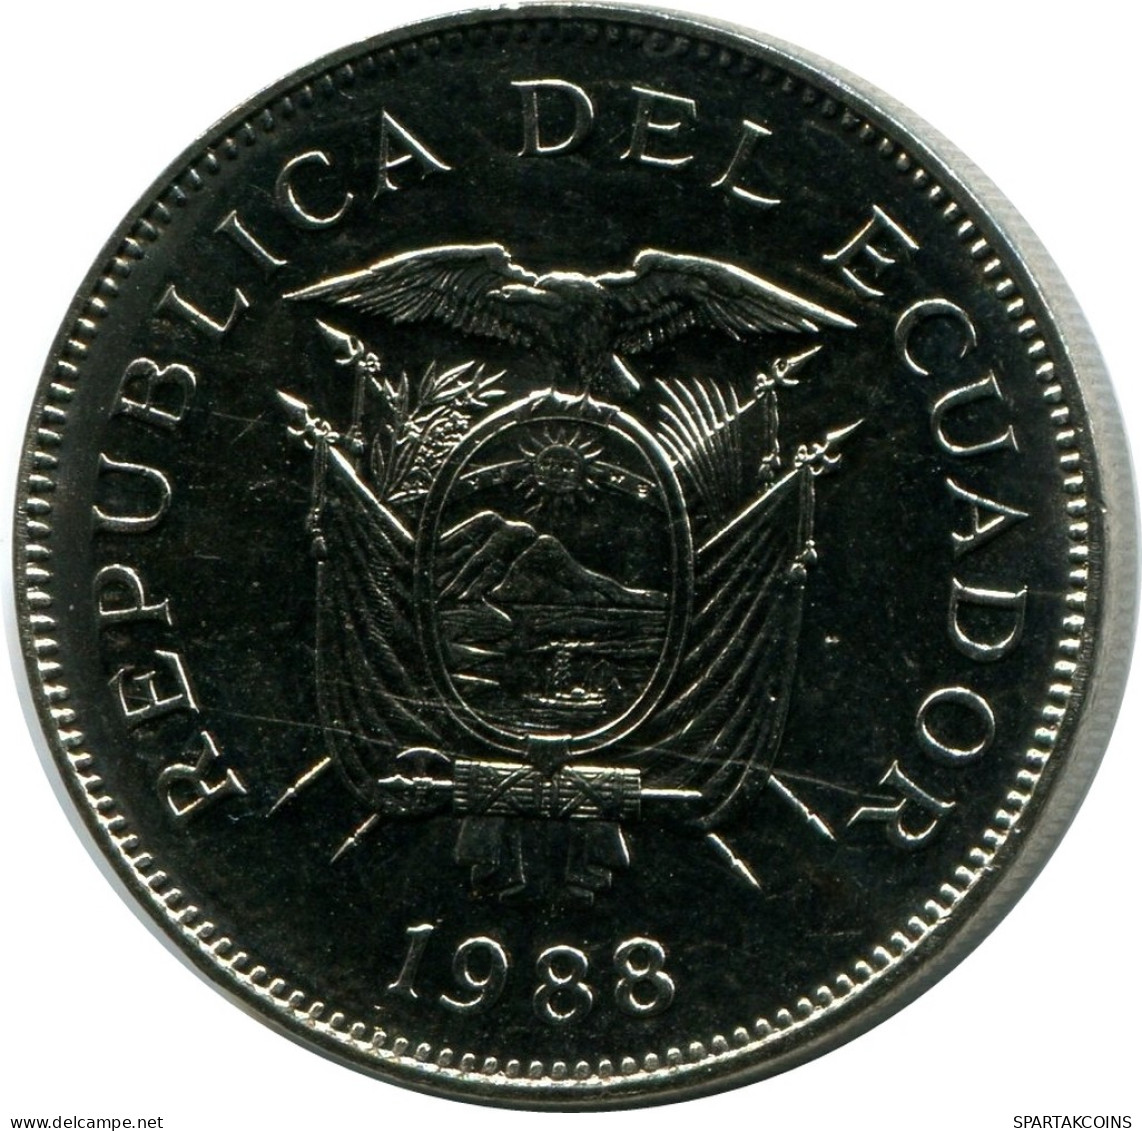 50 SUCRE 1991 ECUADOR UNC Coin #M10153.U - Ecuador